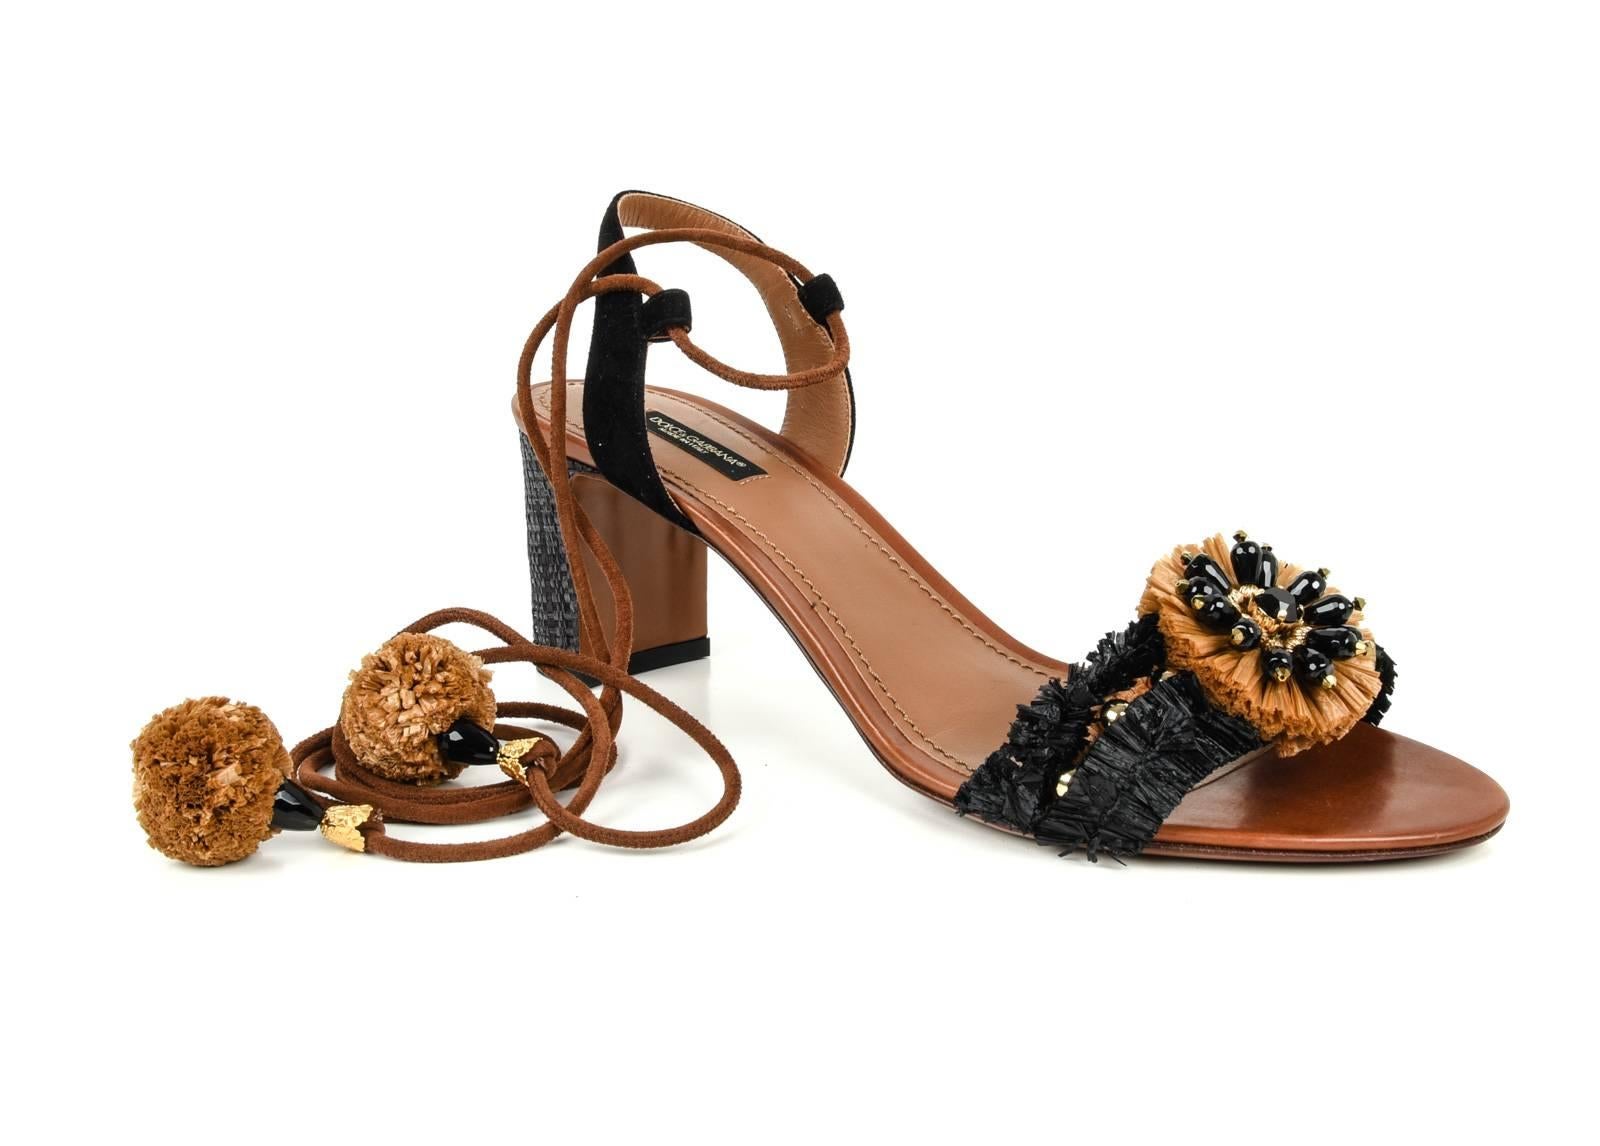 Dolce&Gabbana Shoe Rafia  Leather Ankle Tie Black  Camel 40.5 / 10.5 New  5